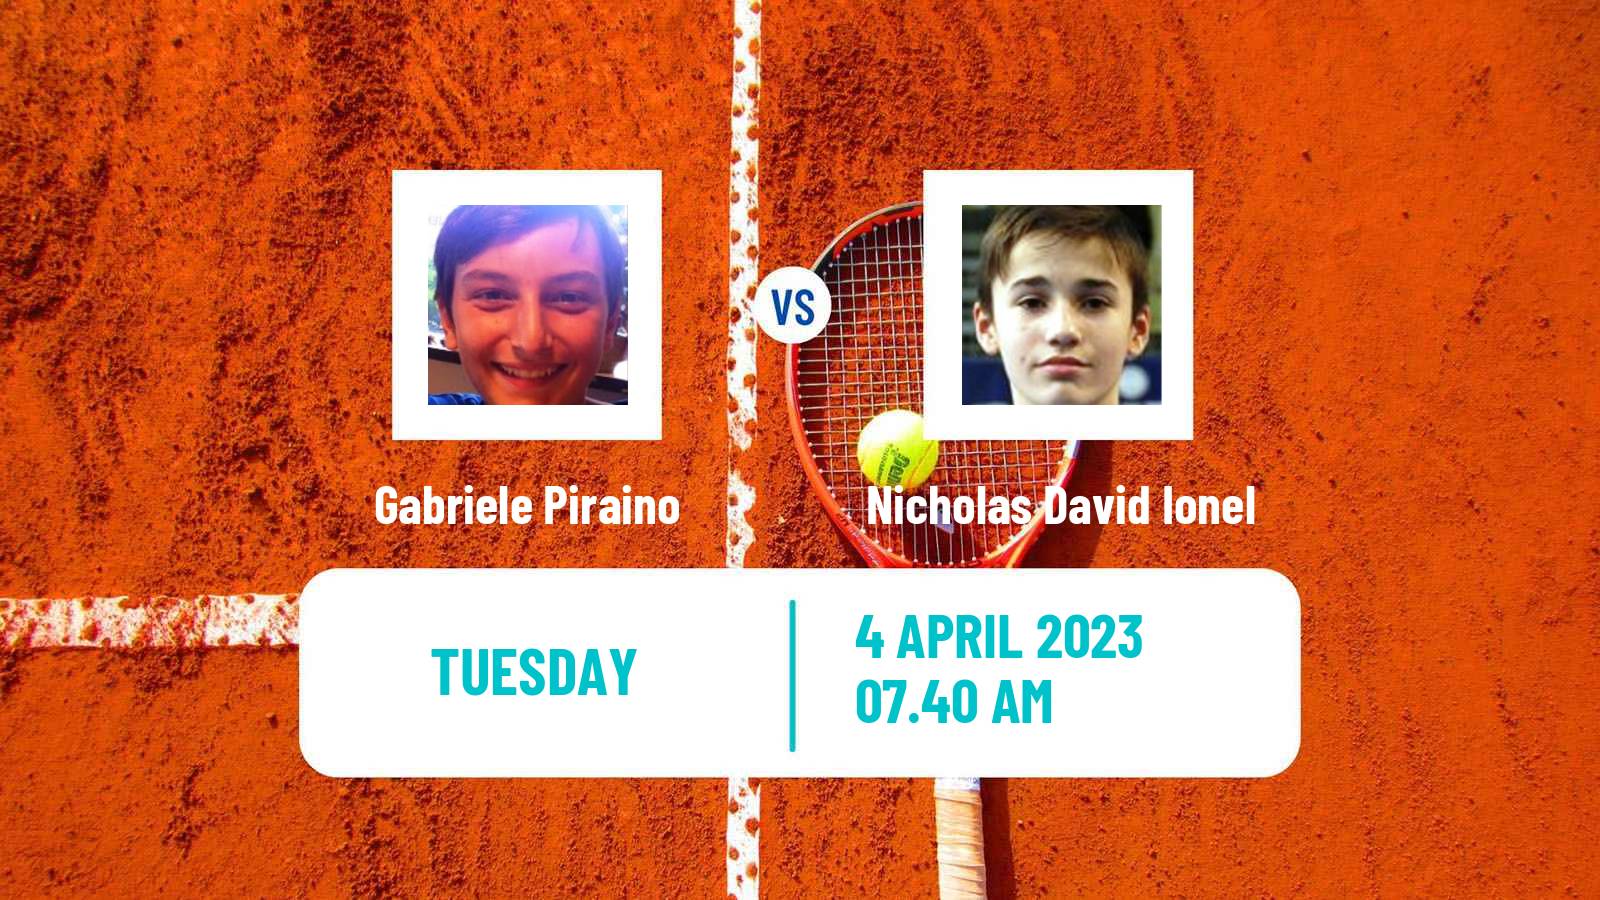 Tennis ATP Challenger Gabriele Piraino - Nicholas David Ionel